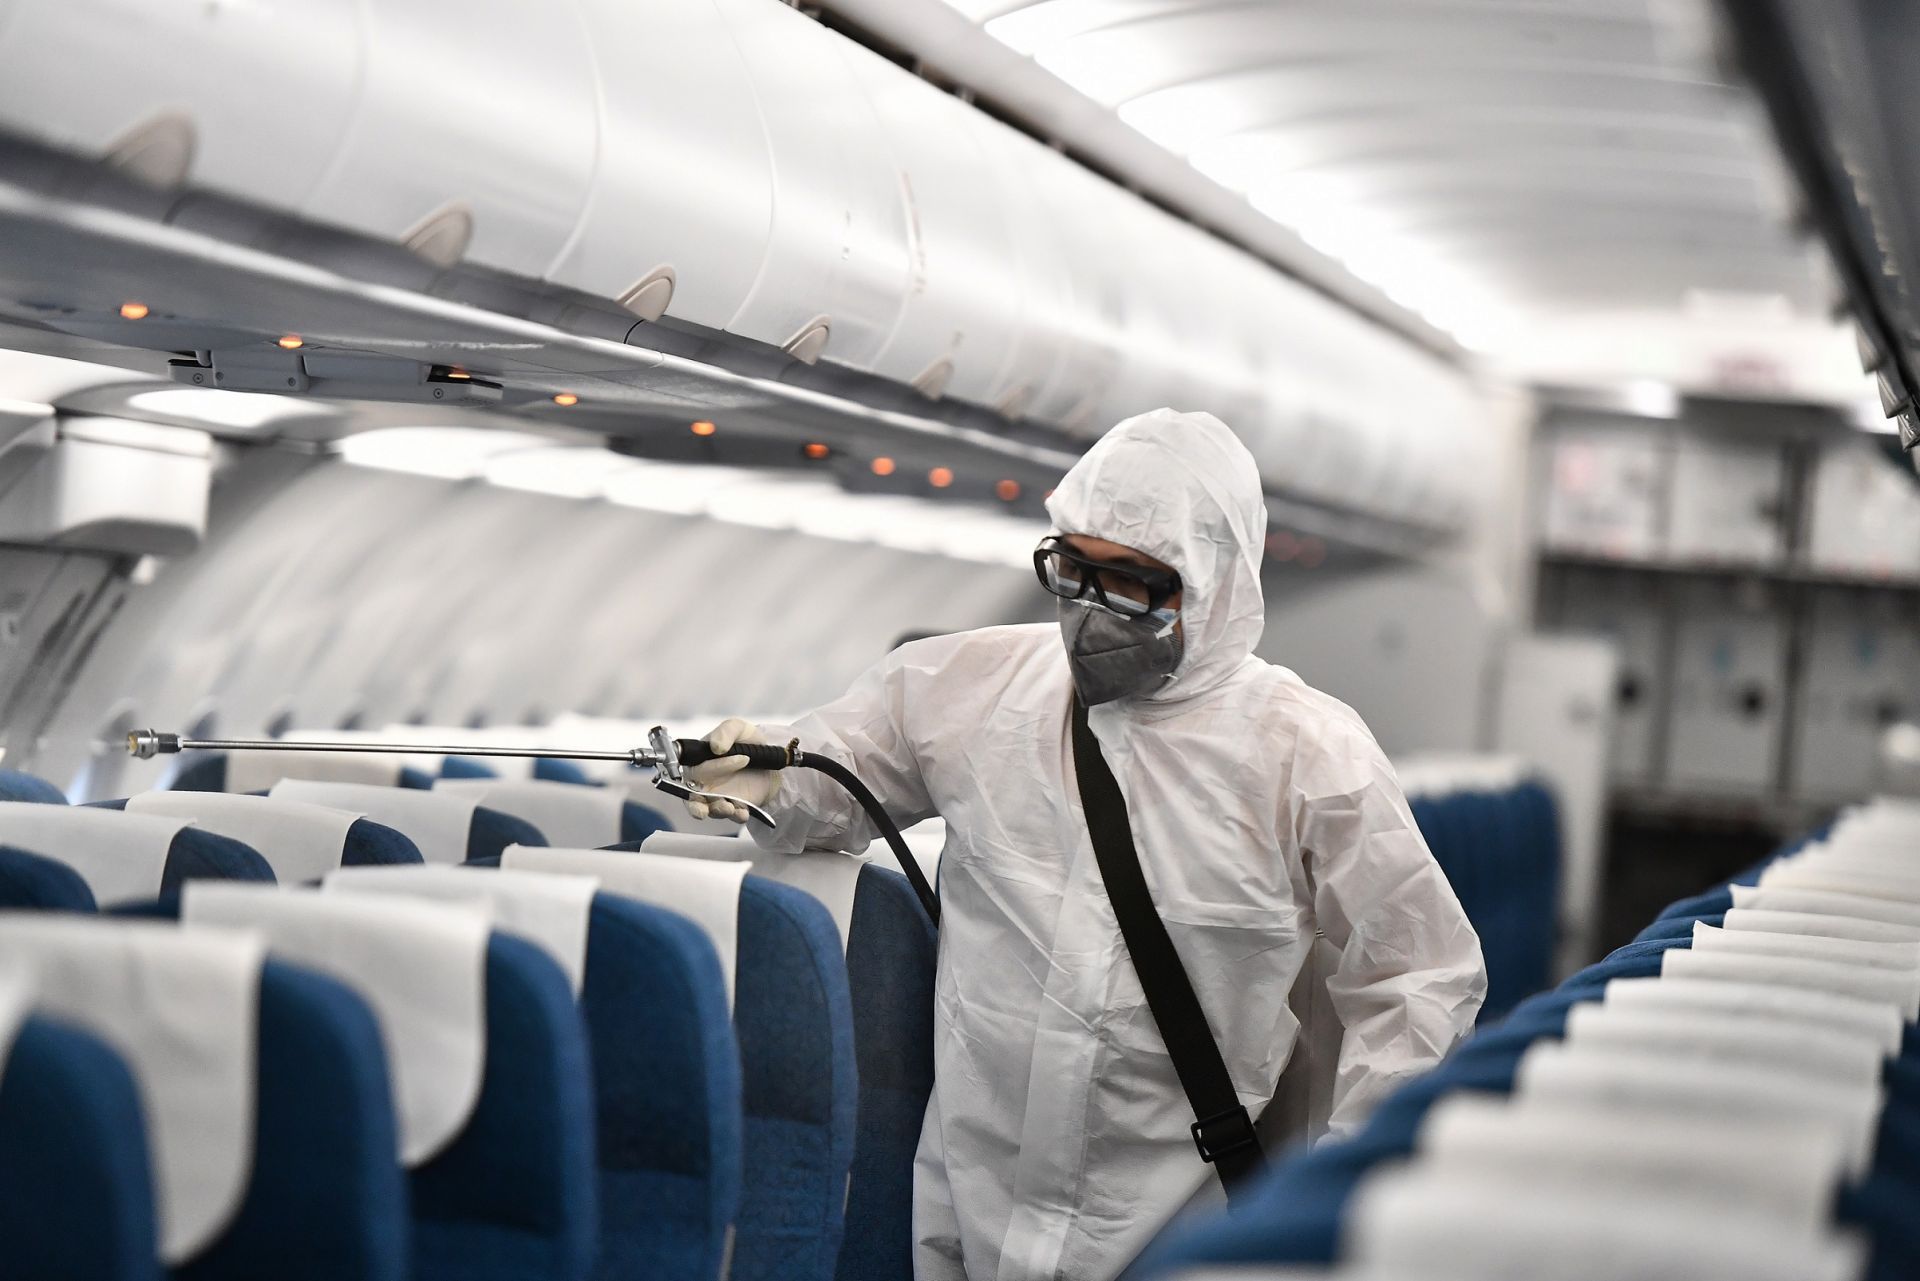 crew of flight with covid 19 cases negative for coronavirus